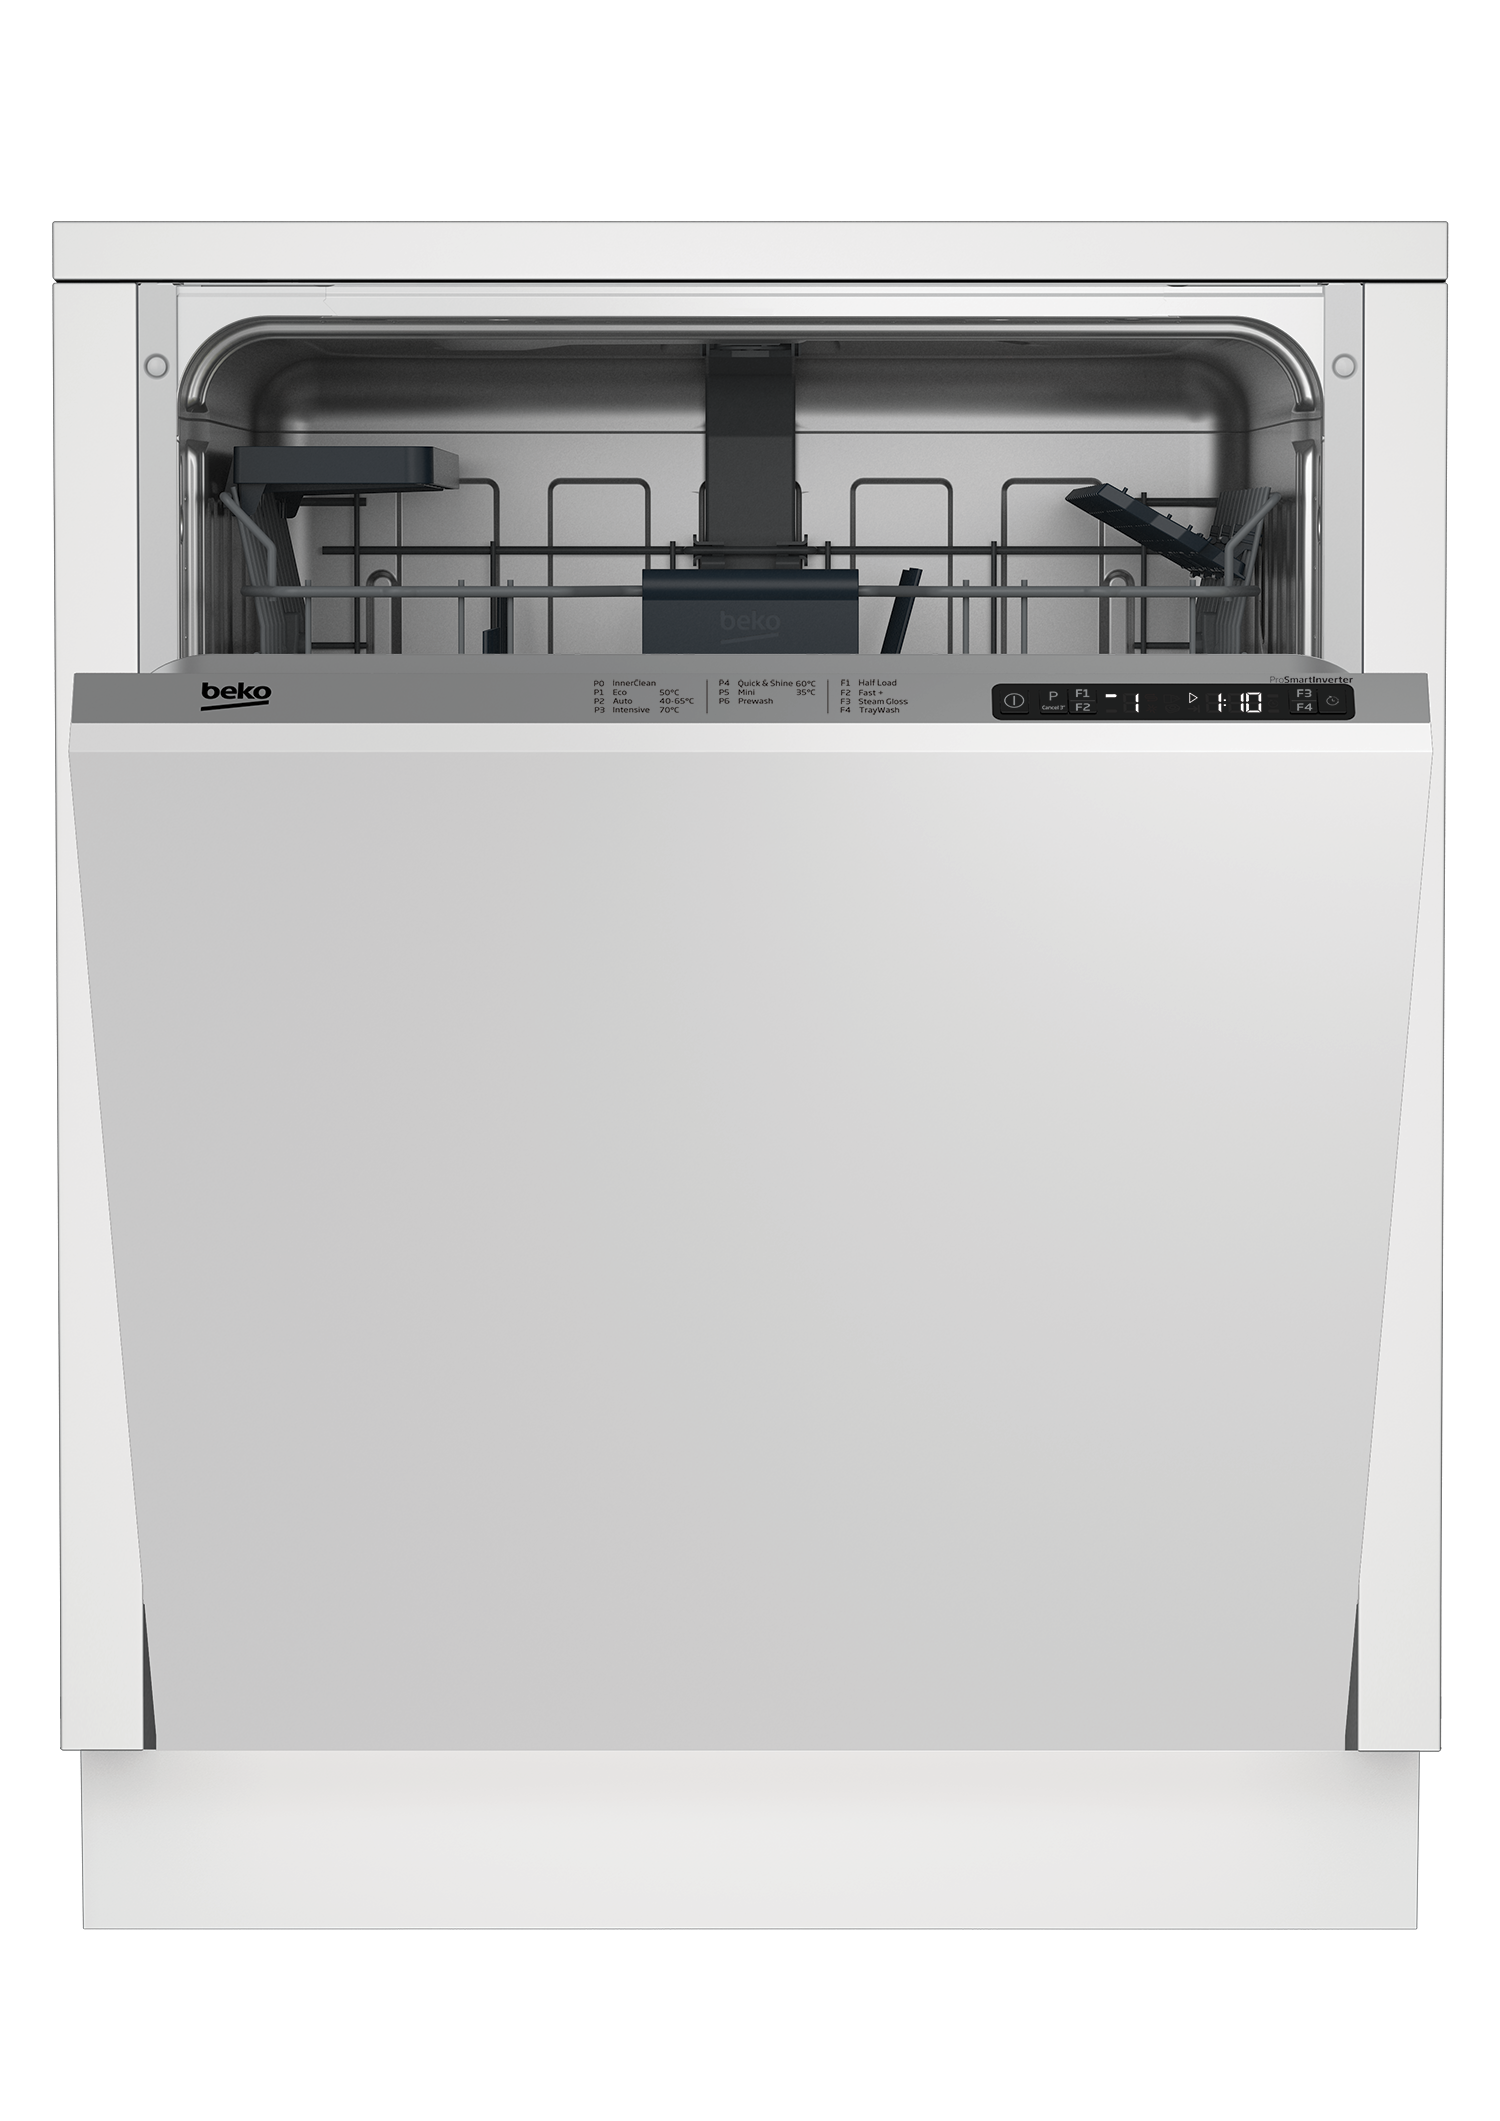 Dishwasher (14 place settings, Full 